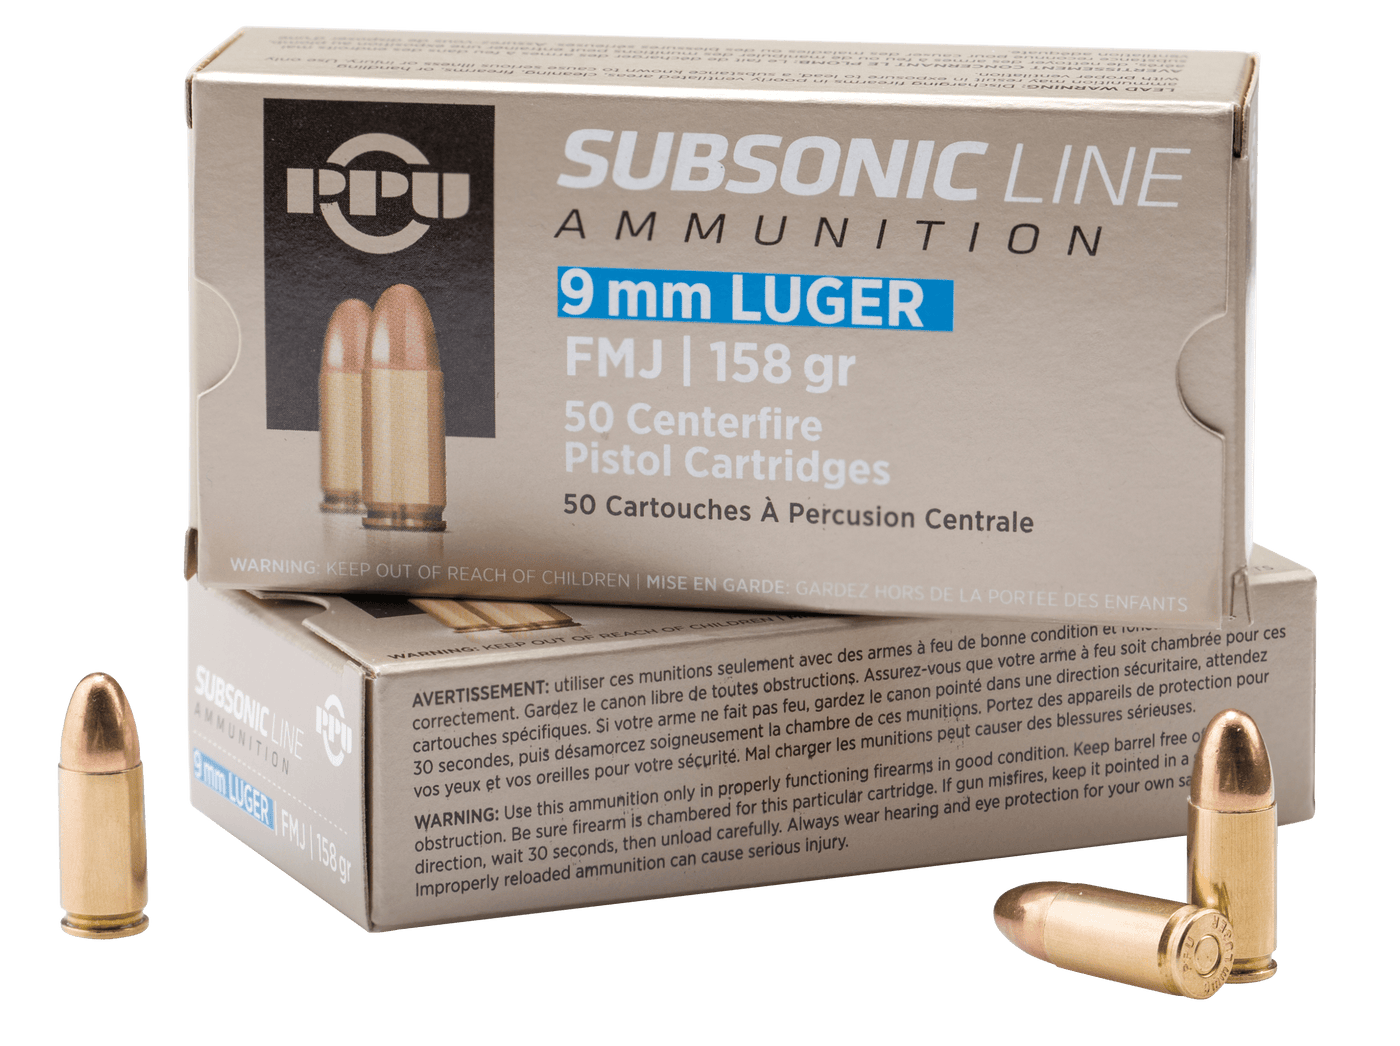 PPU Ppu Subsonic, Ppu Pps9mm      9mm Lug Sub 158 Fmj          50/20 Ammo